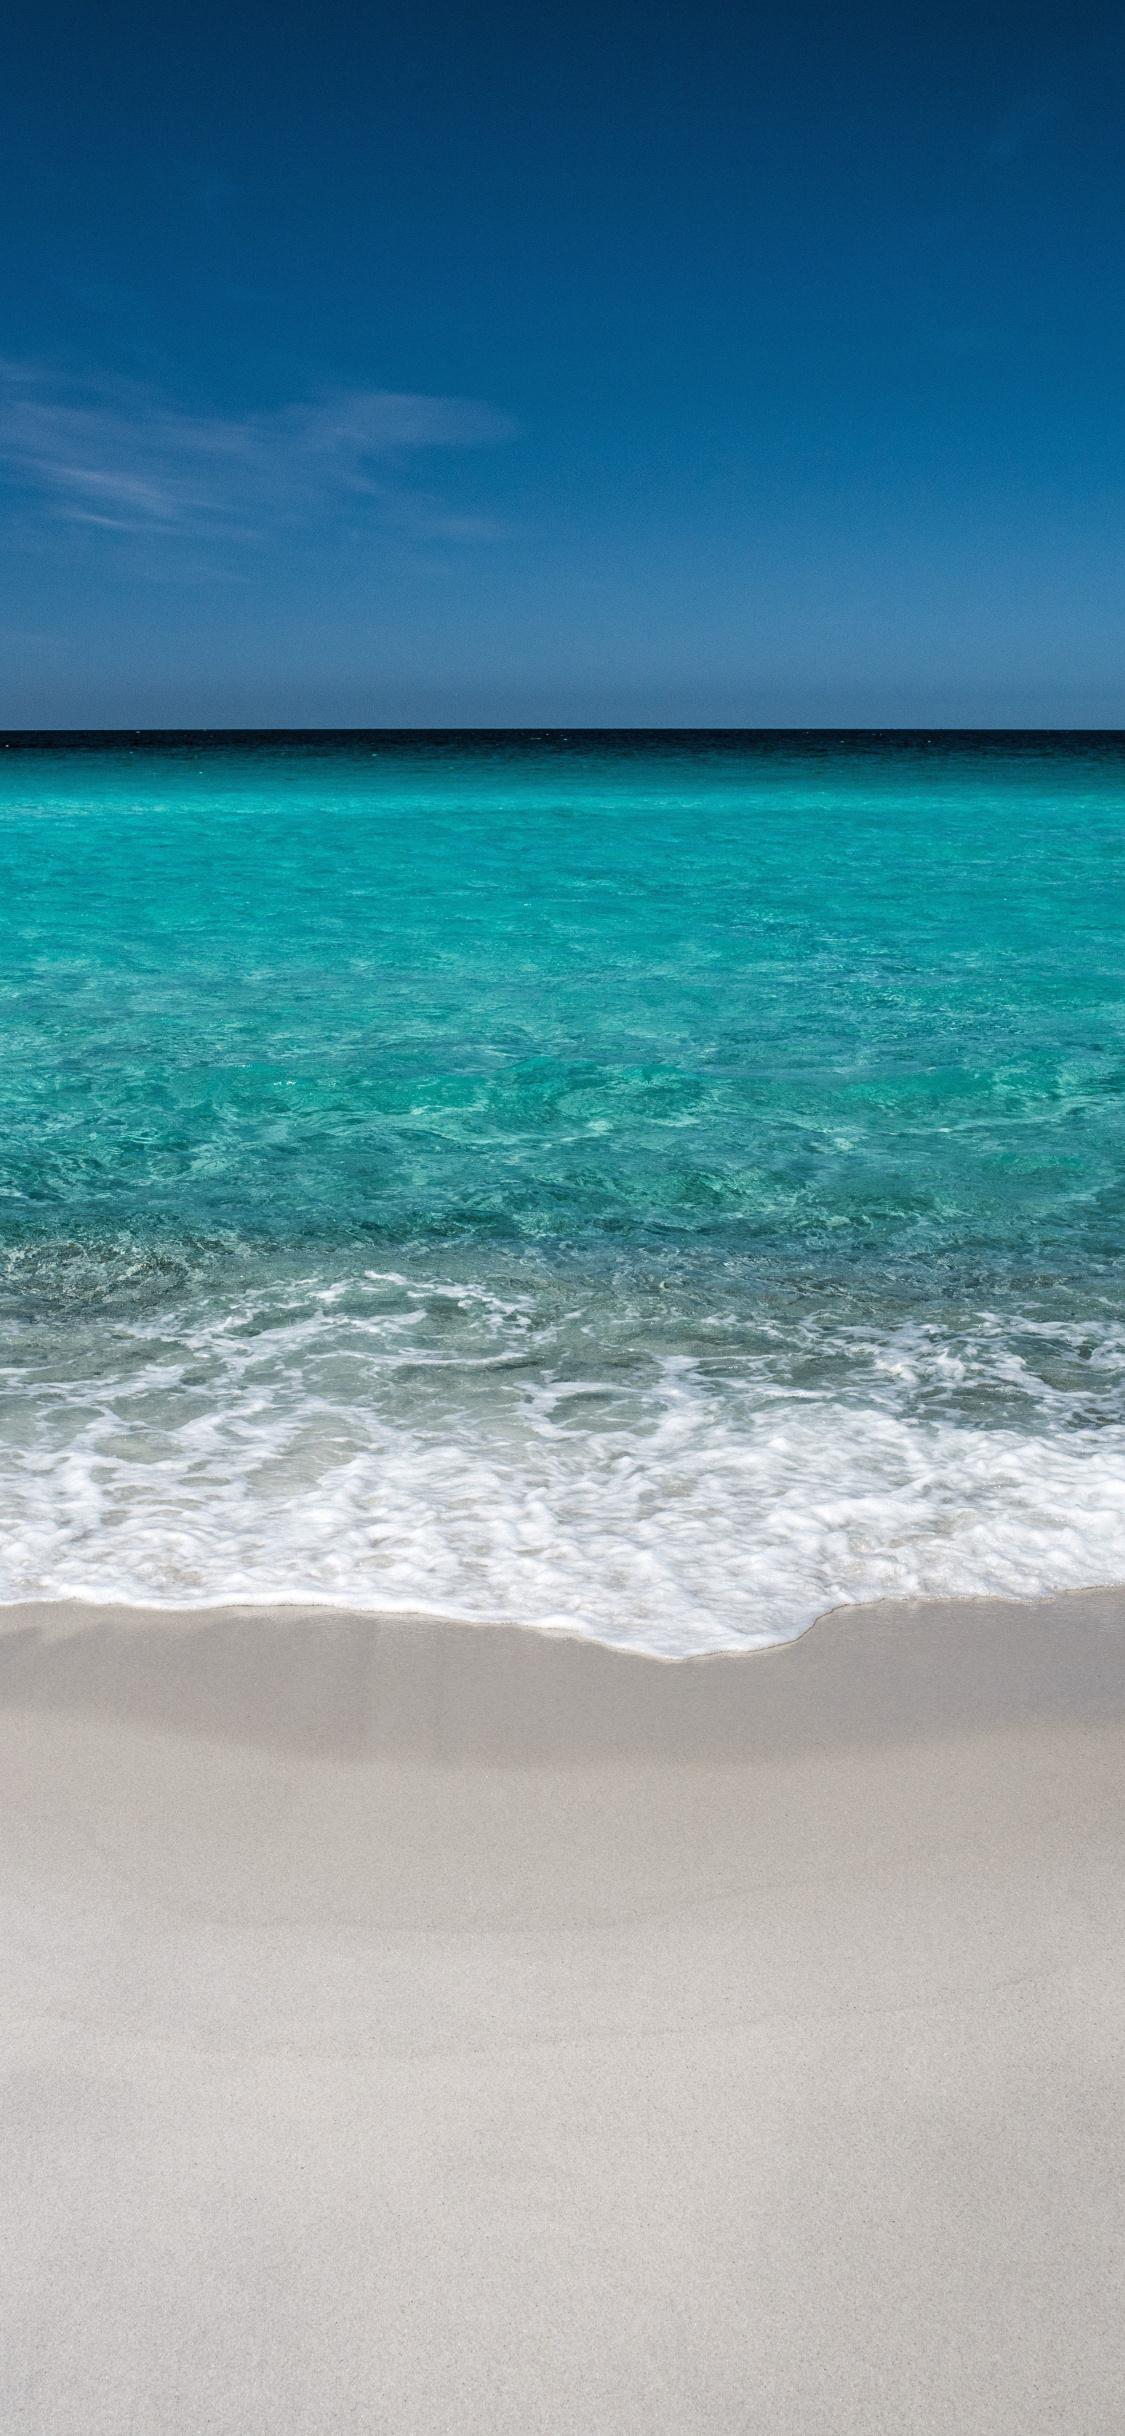 Download 1125x2436 wallpaper beach, soft, sea waves, blue